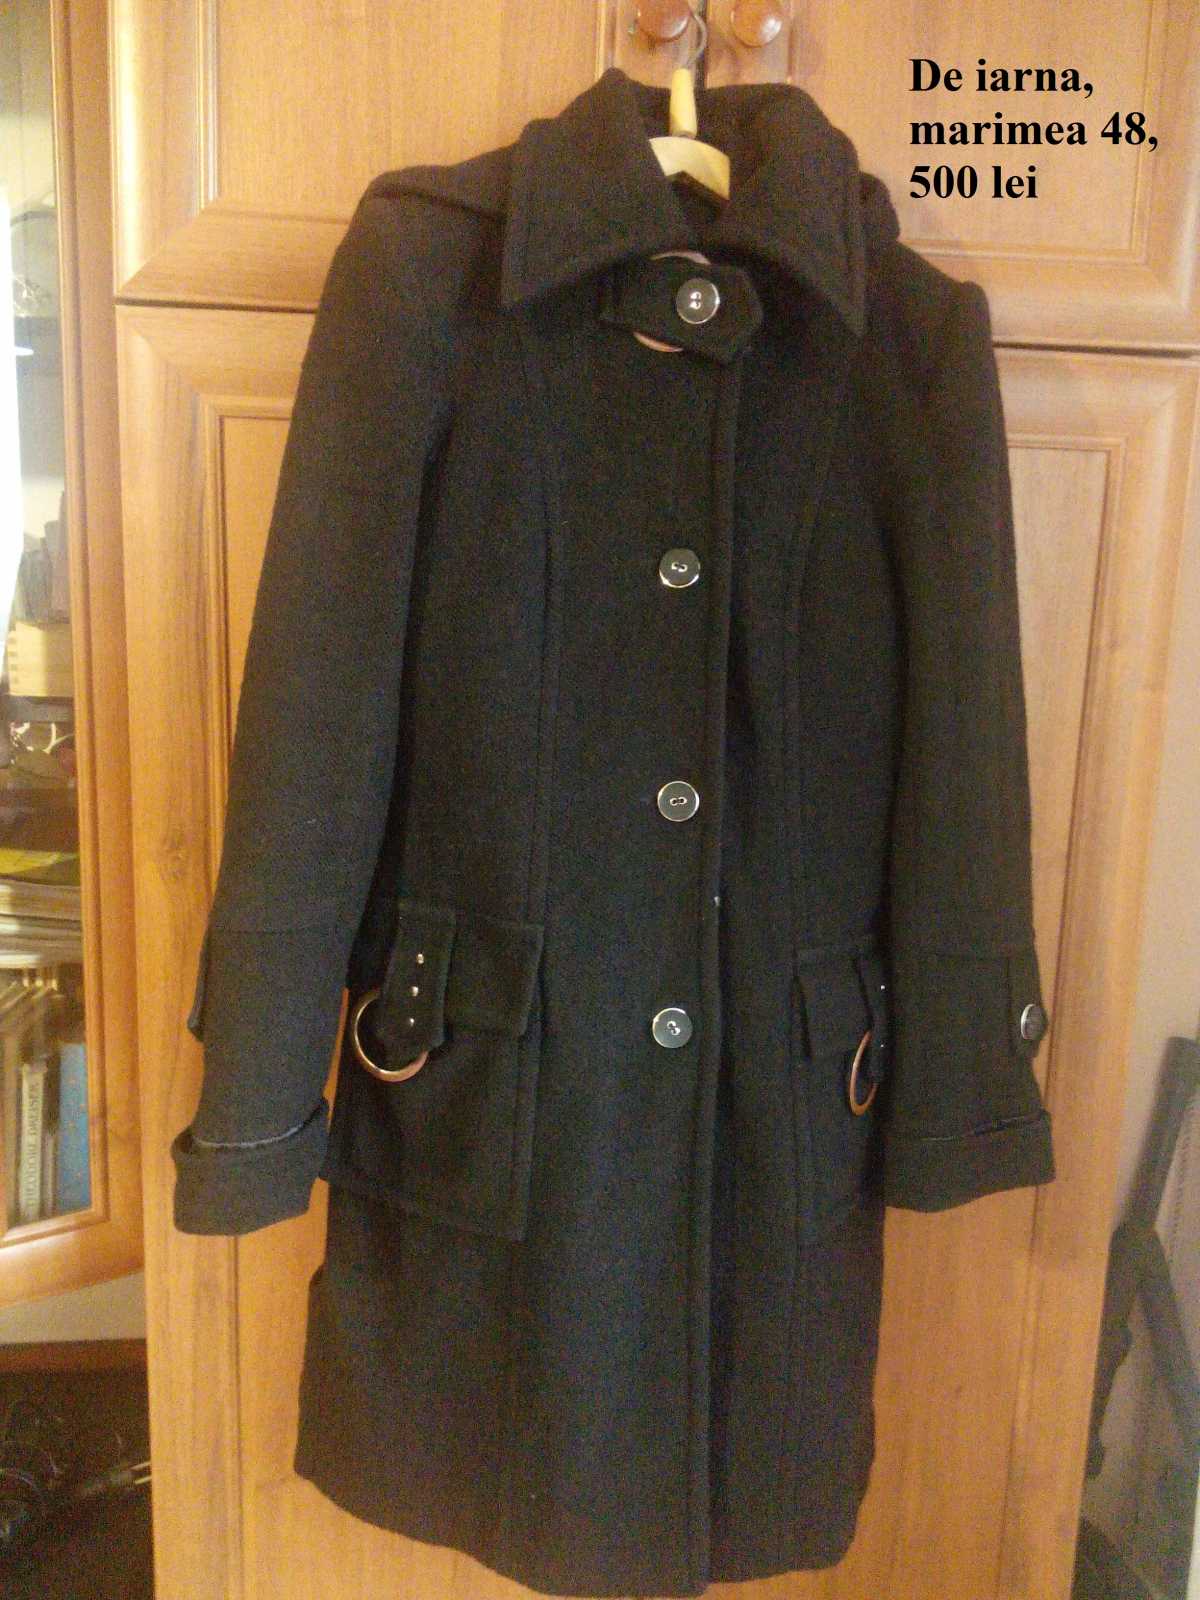 Palton negru de iarna.jpg